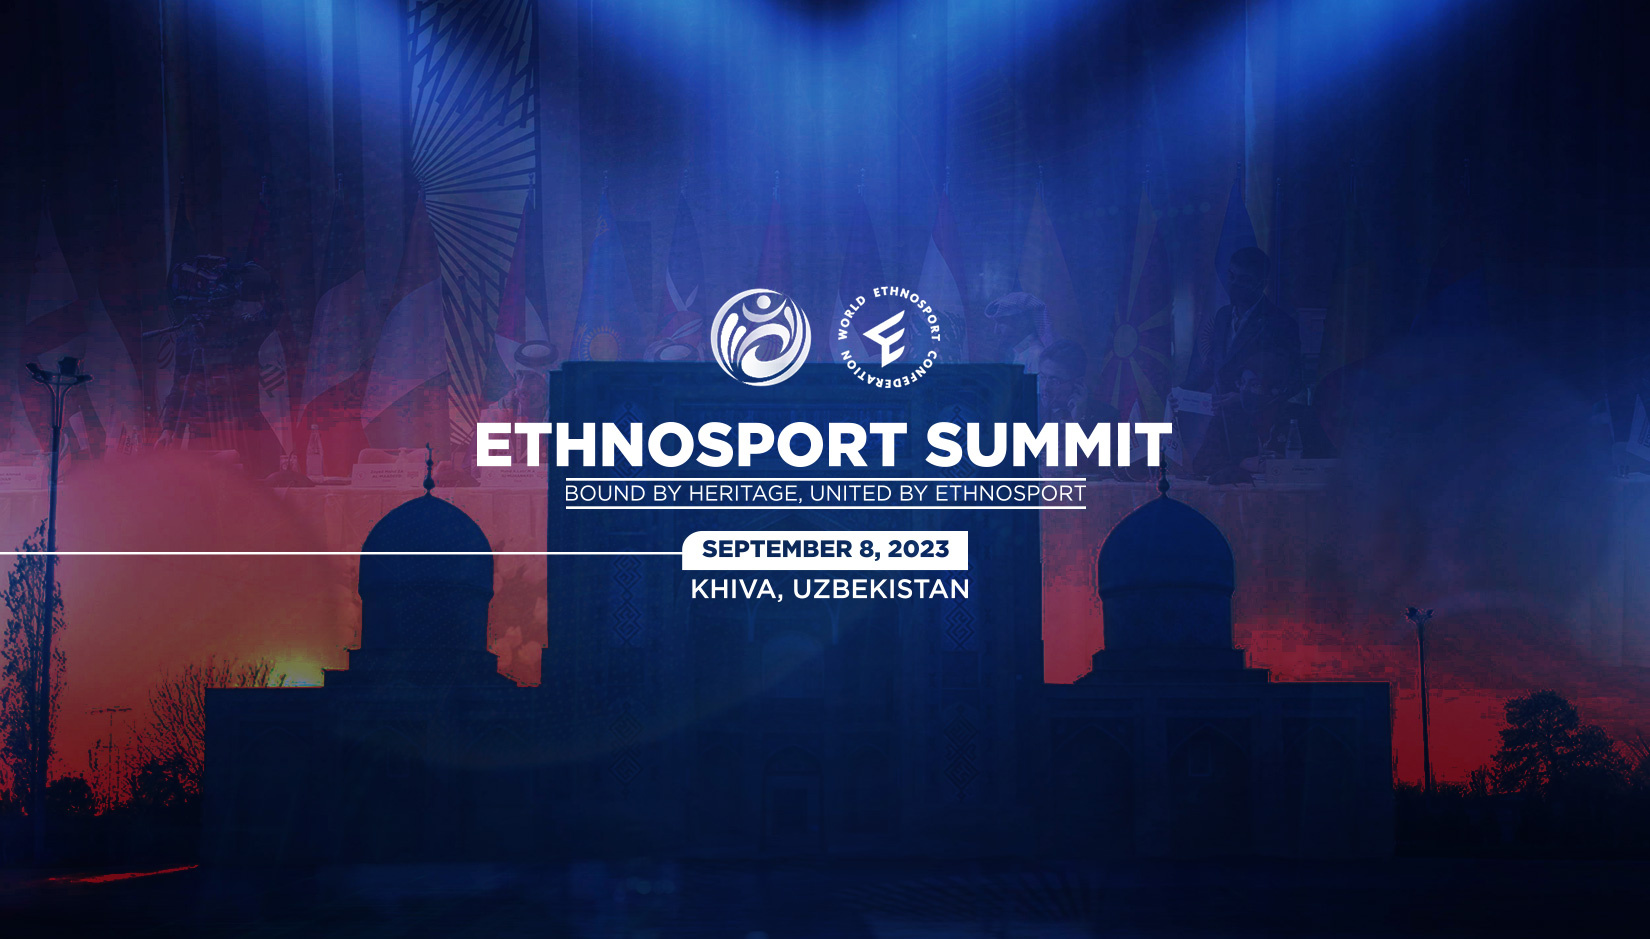 The Ethnosport Summit Will Be Held in Khiva on September 8, 2023